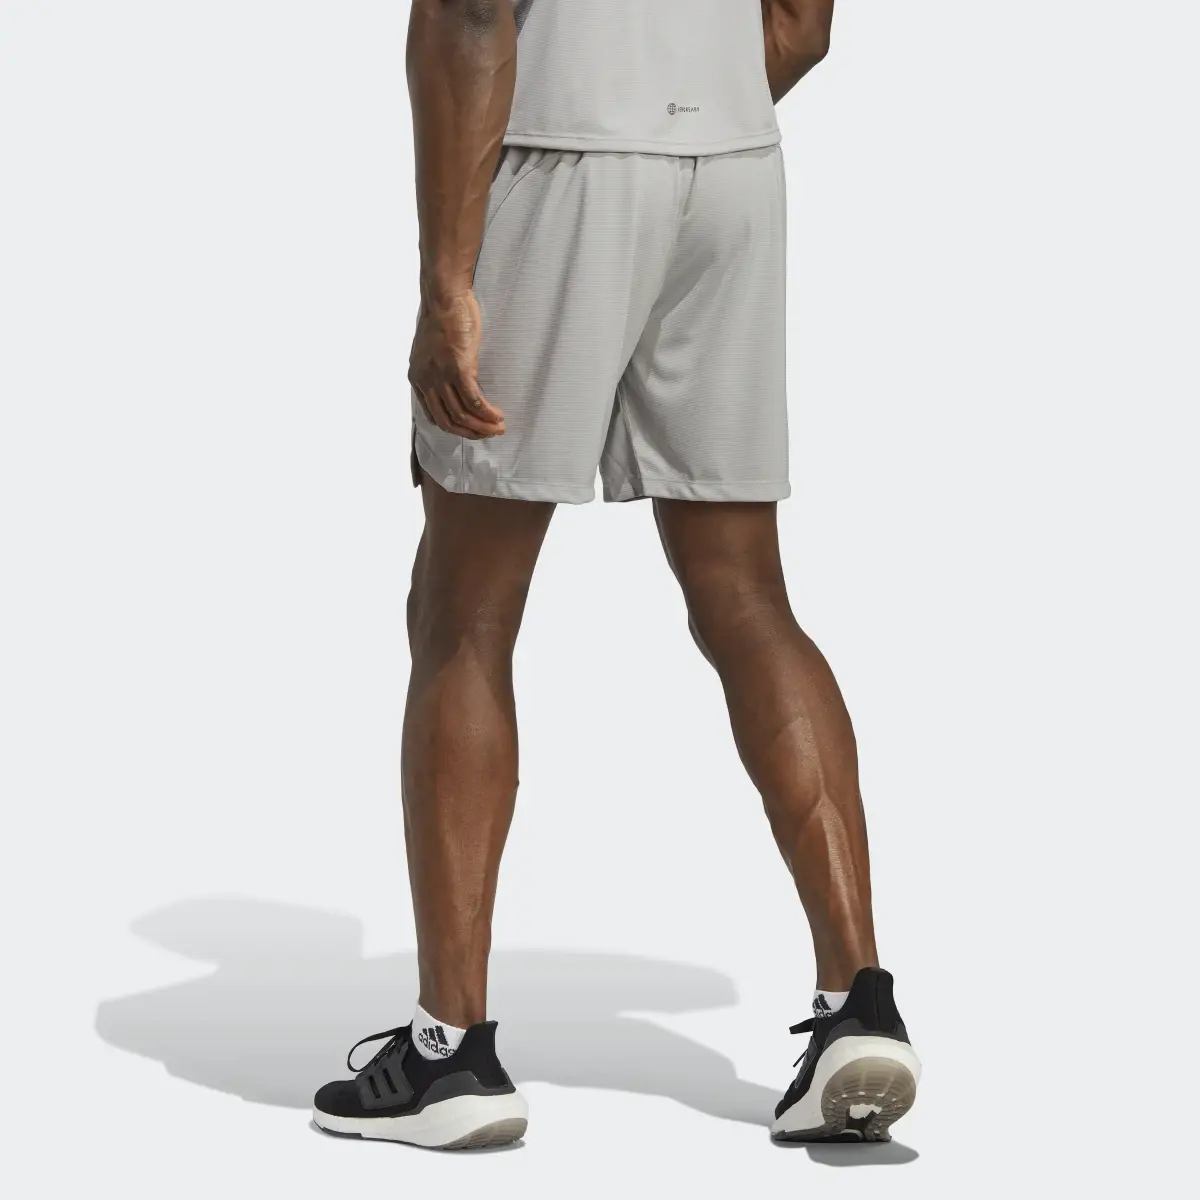 Adidas Short imprimé en PU Workout. 2